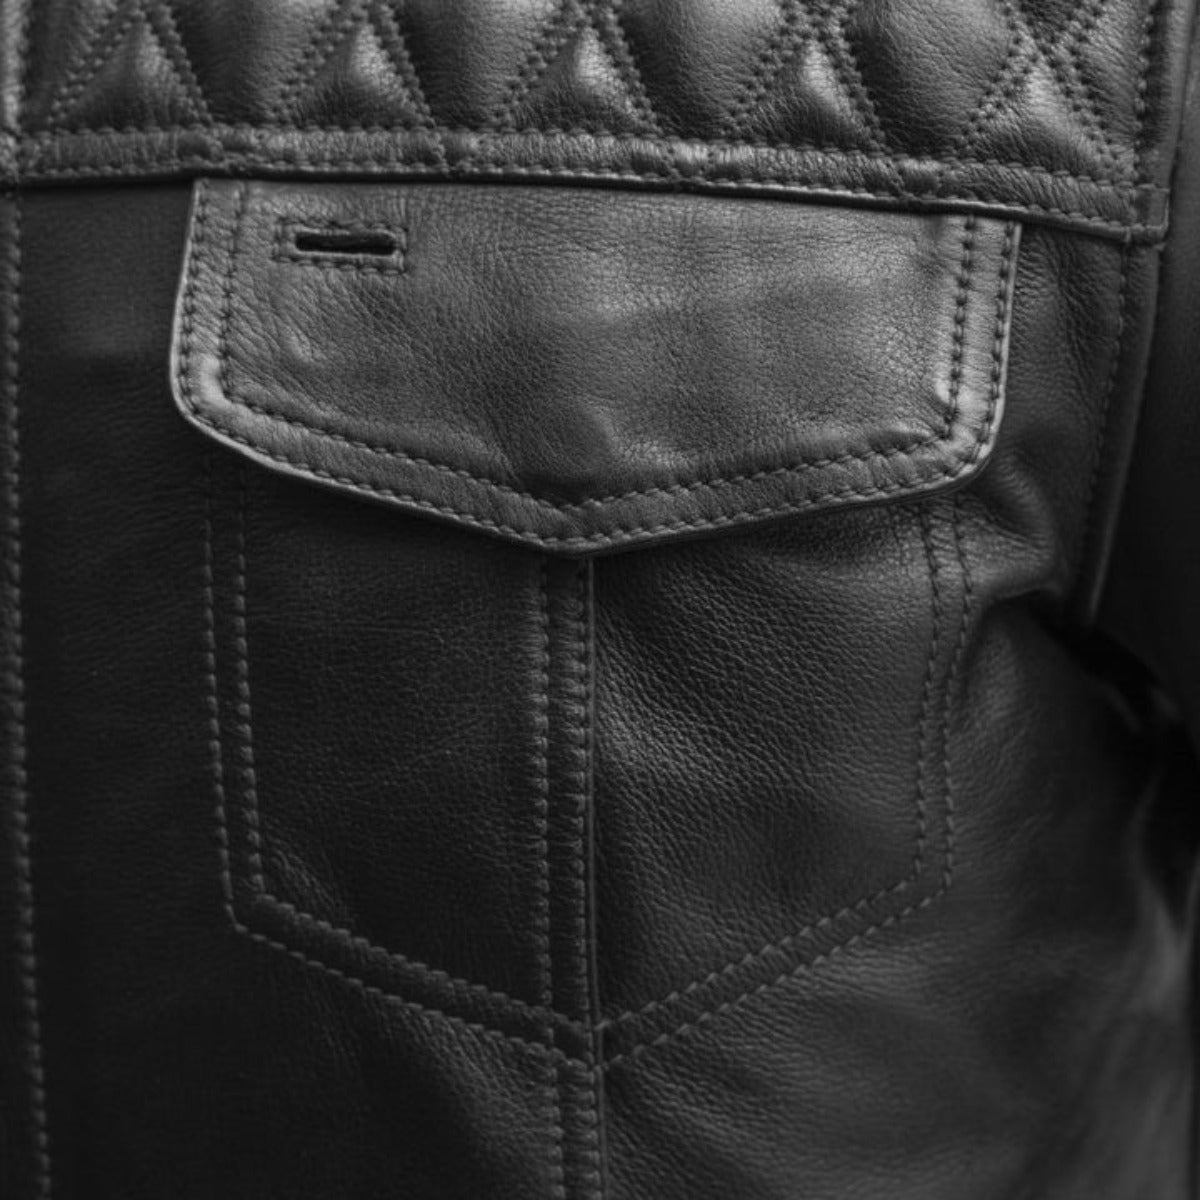 First Manufacturing Cinder - Men's Cafe Style Leather Jacket, Black